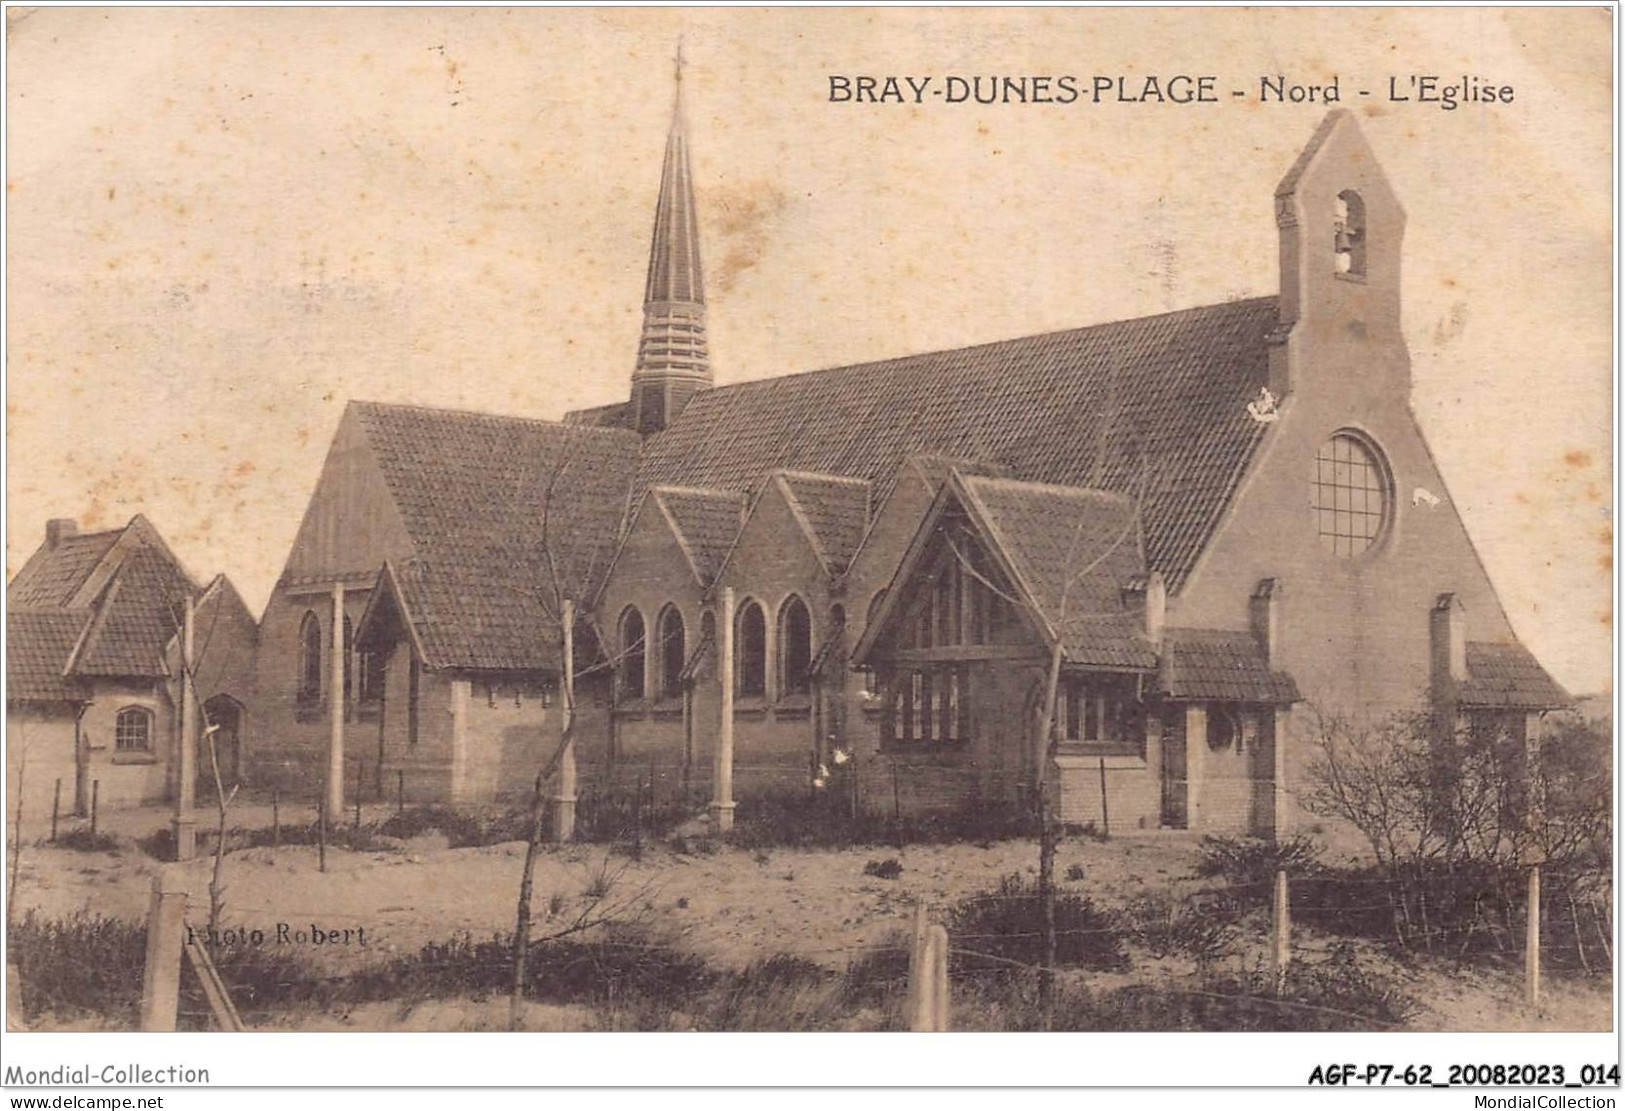 AGFP7-62-0593 - BRAY-DUNES-PLAGE - Nord - L'église - Bray-Dunes